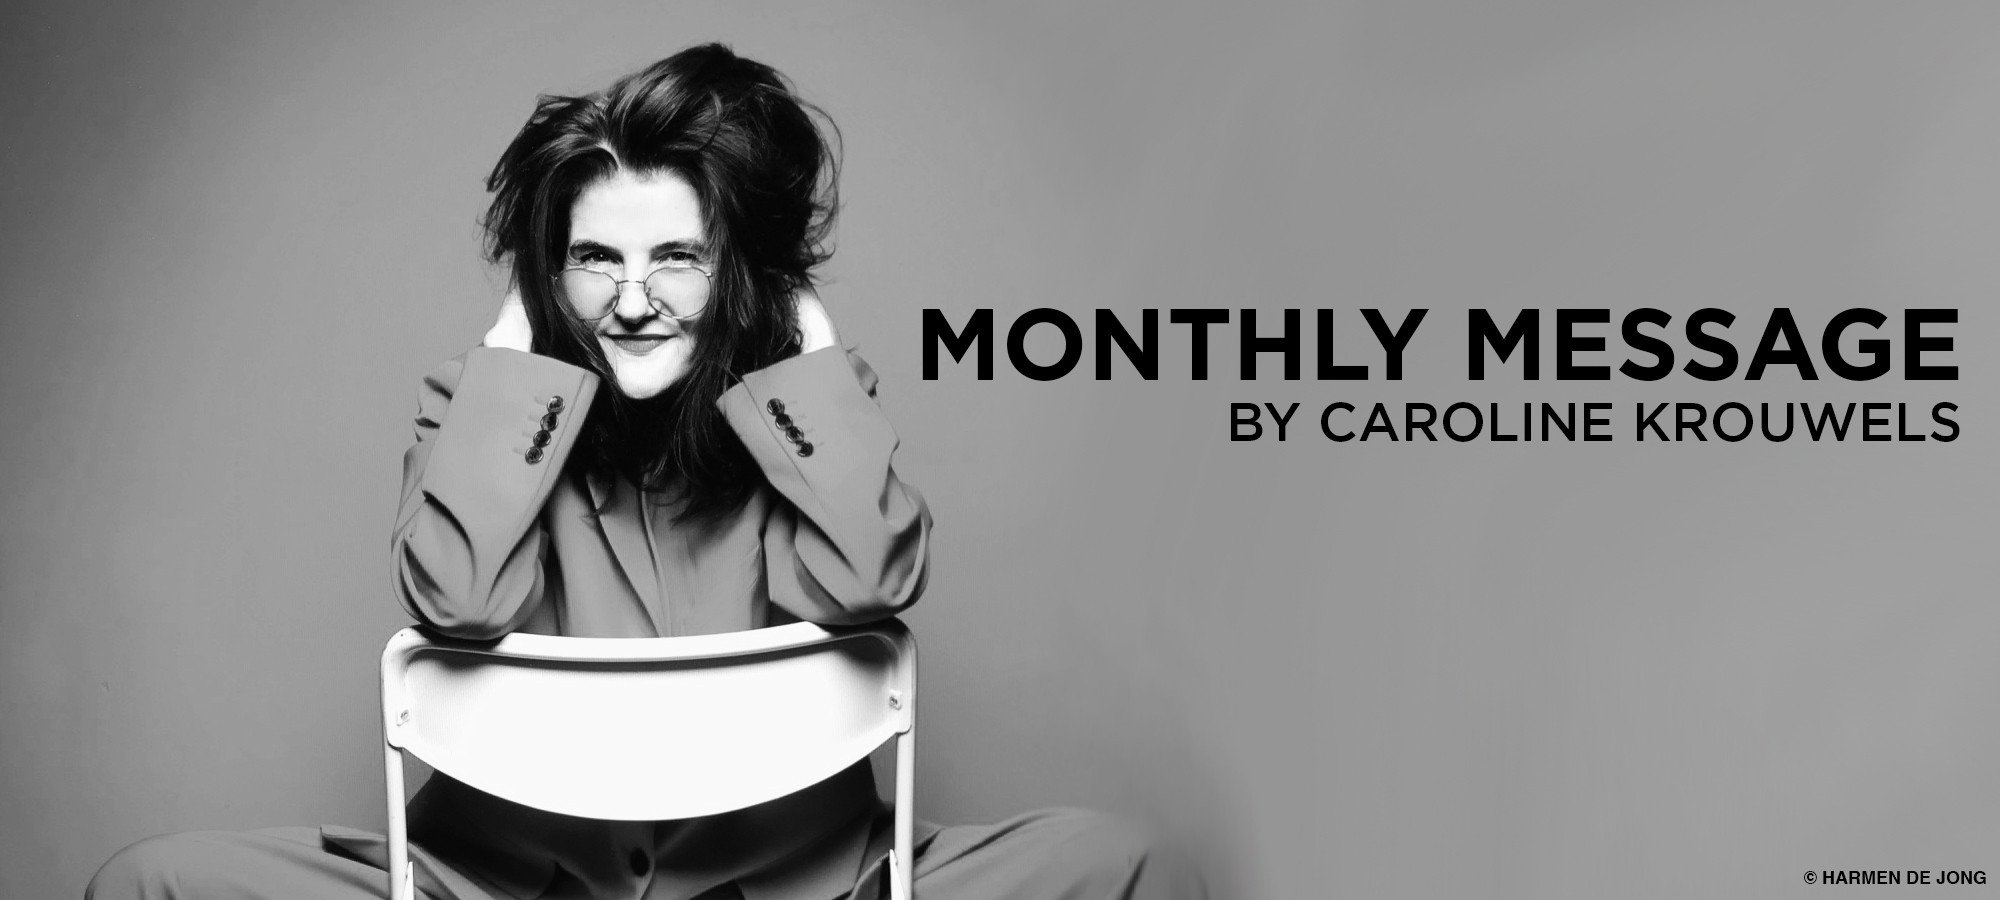 Caroline's Monthly Message: Parisian Inspiration